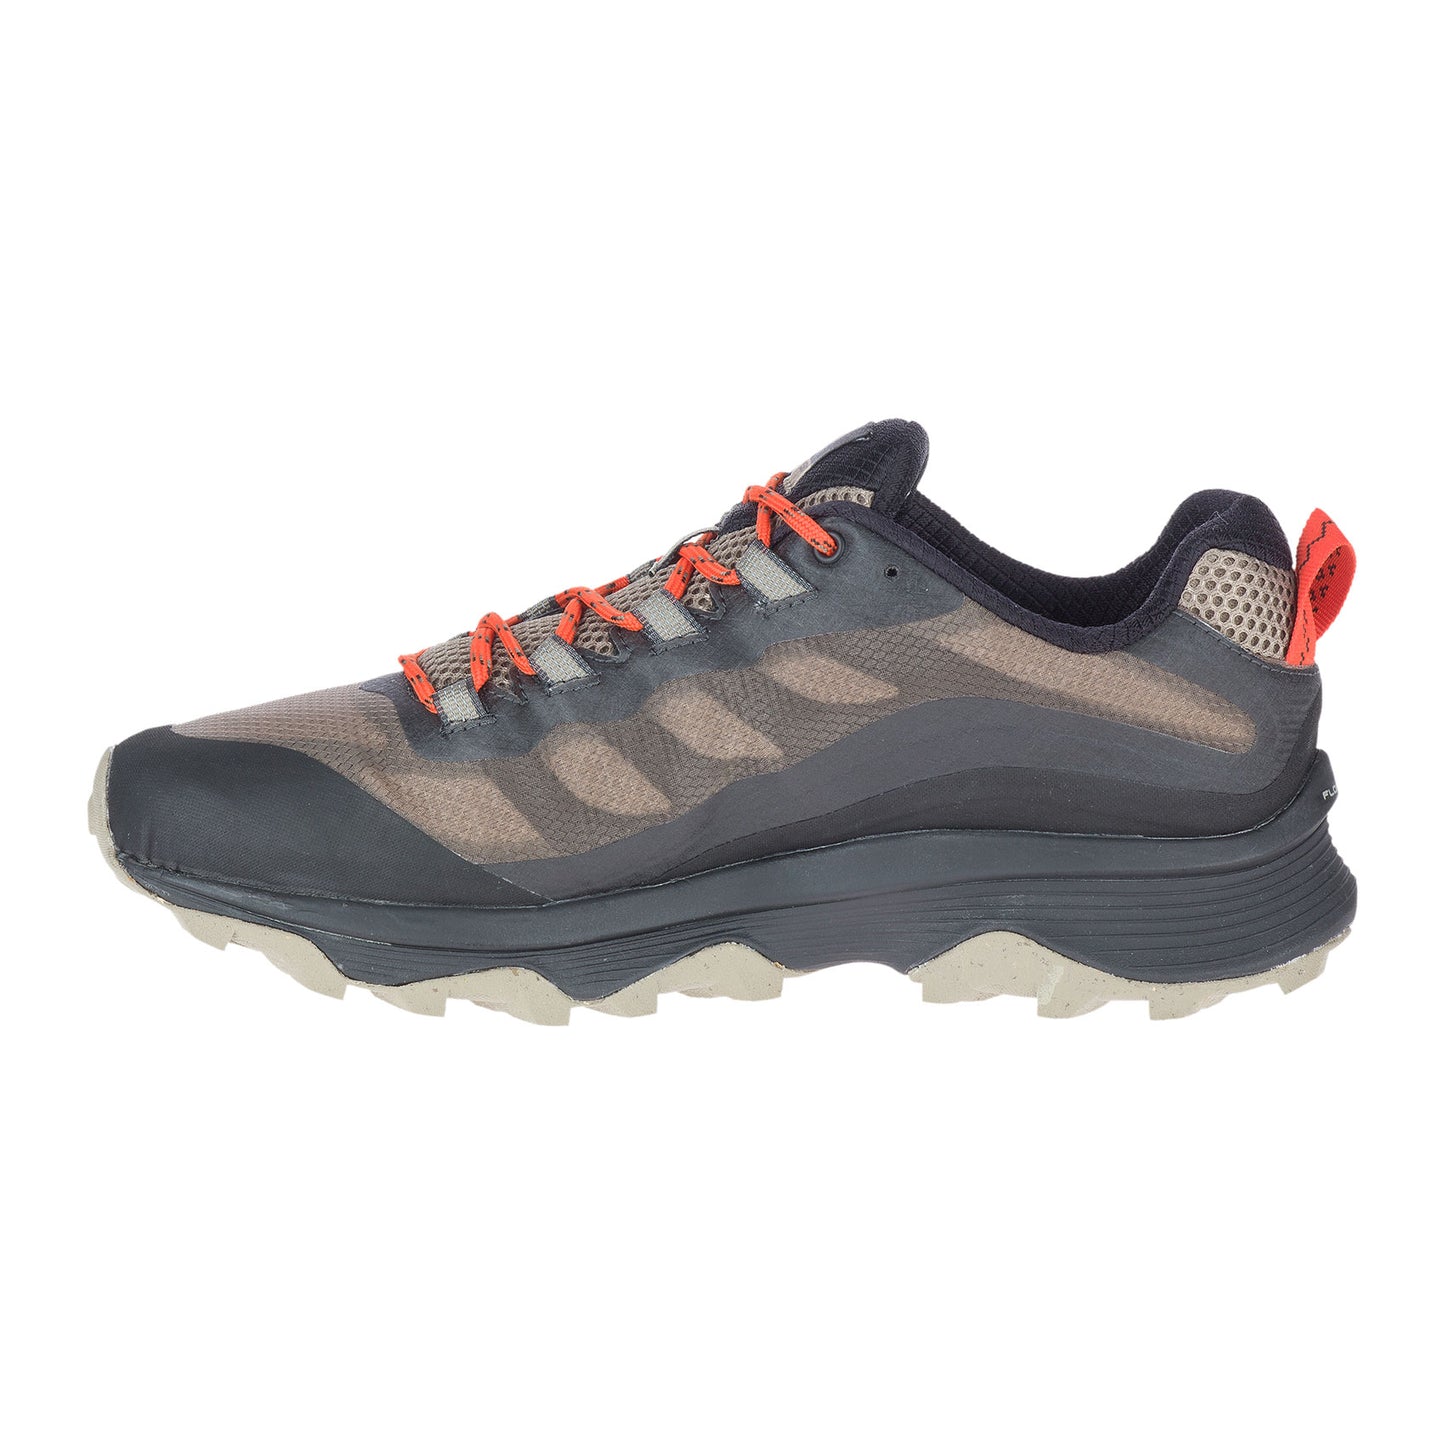 Men's Moab Speed Hiking Shoe - Brindle - Regular (D)